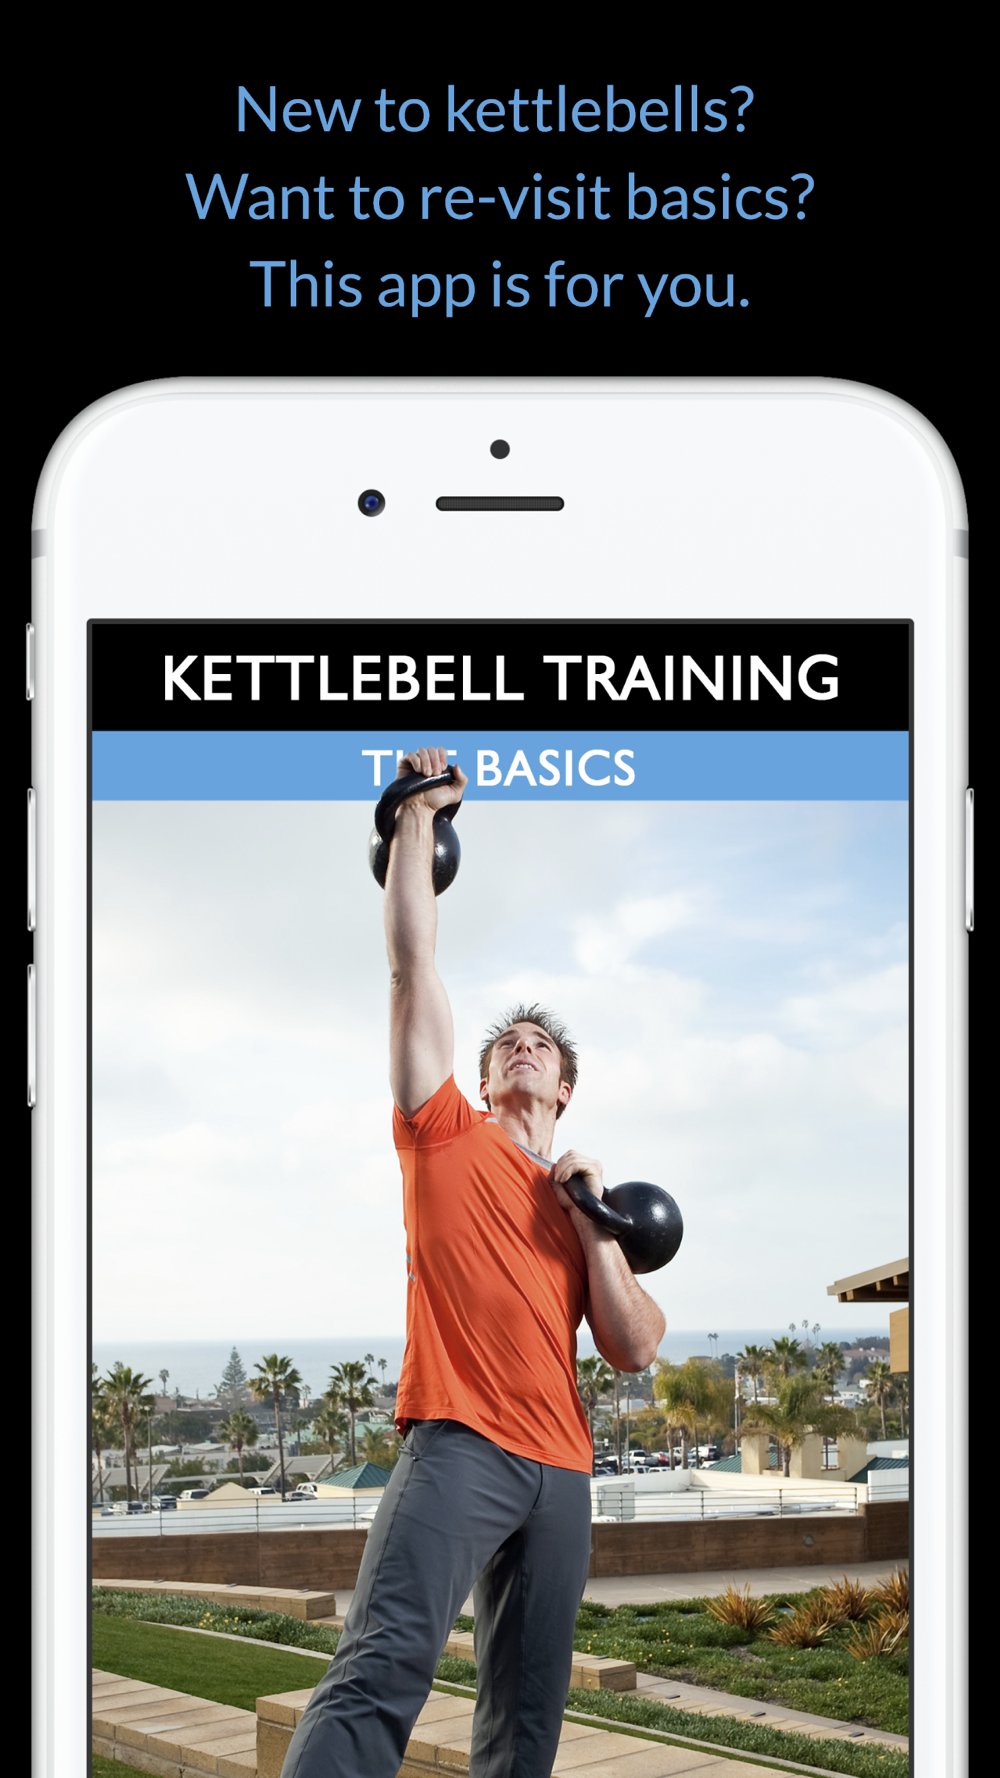 Kettlebell Training The Basics Download App for iPhone - STEPrimo.com